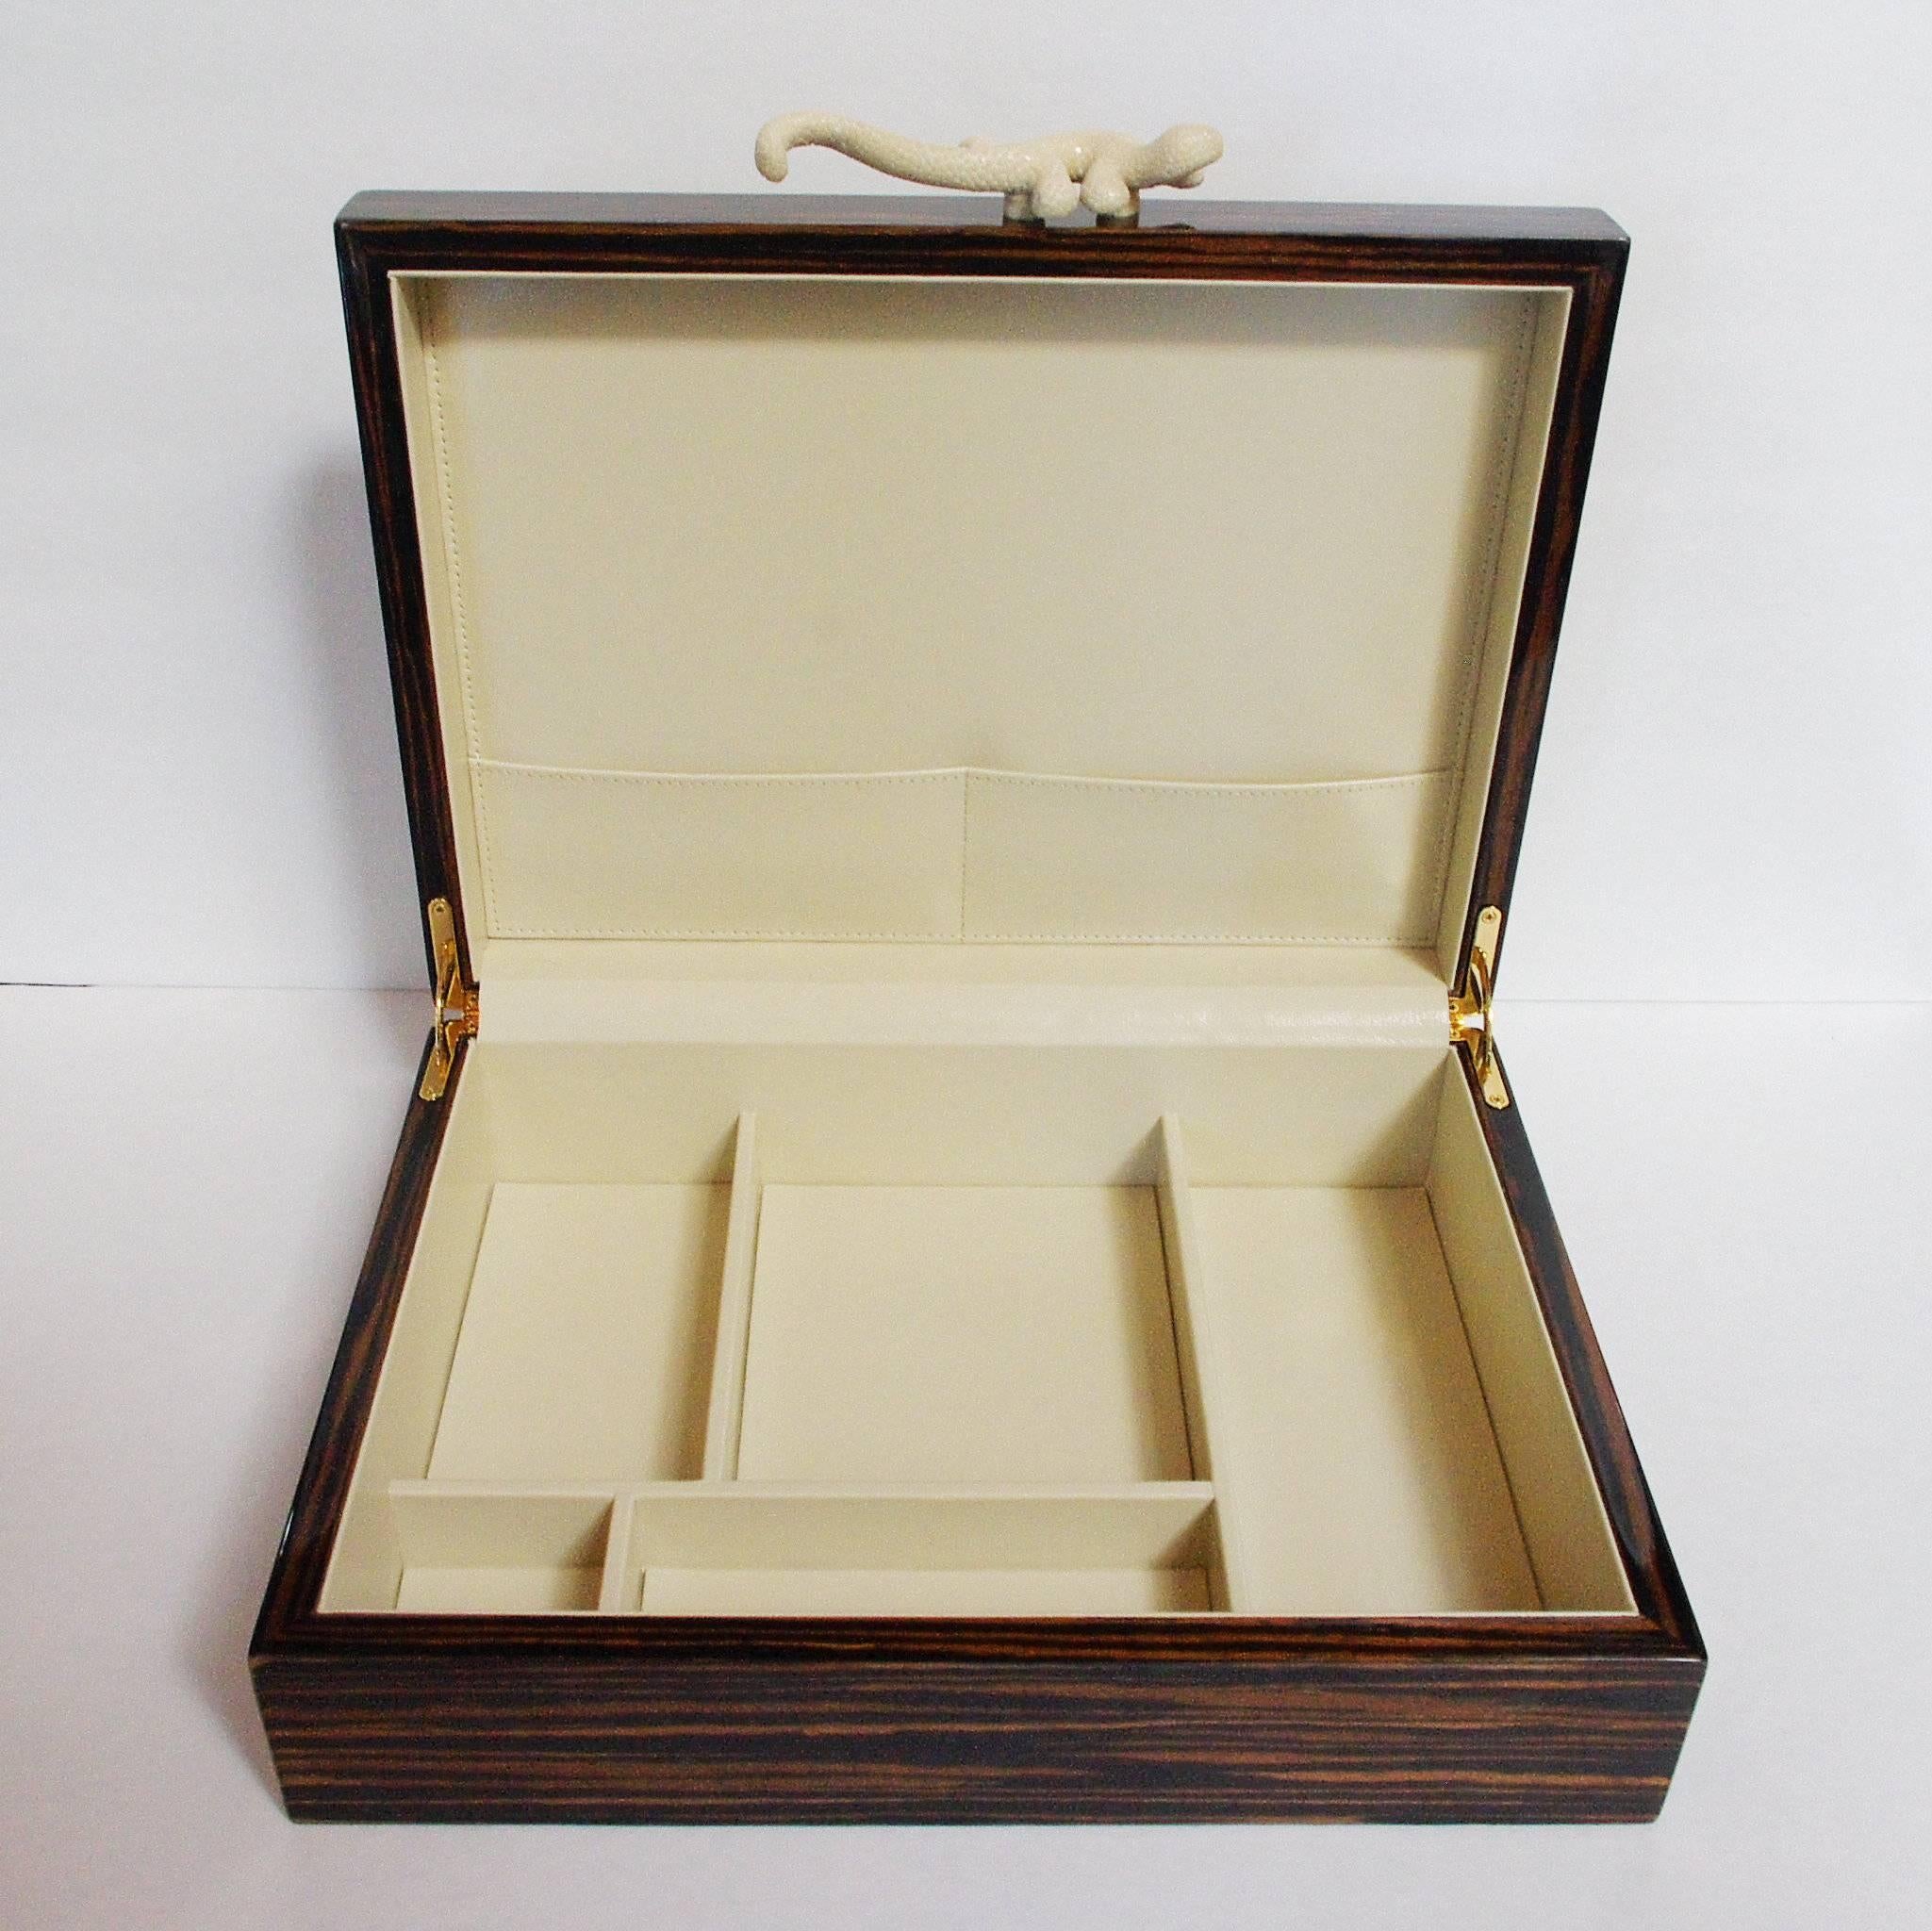 Contemporary Amenity Box in Brown Macassar with Ivory Shagreen Knob by Fabio Bergomi